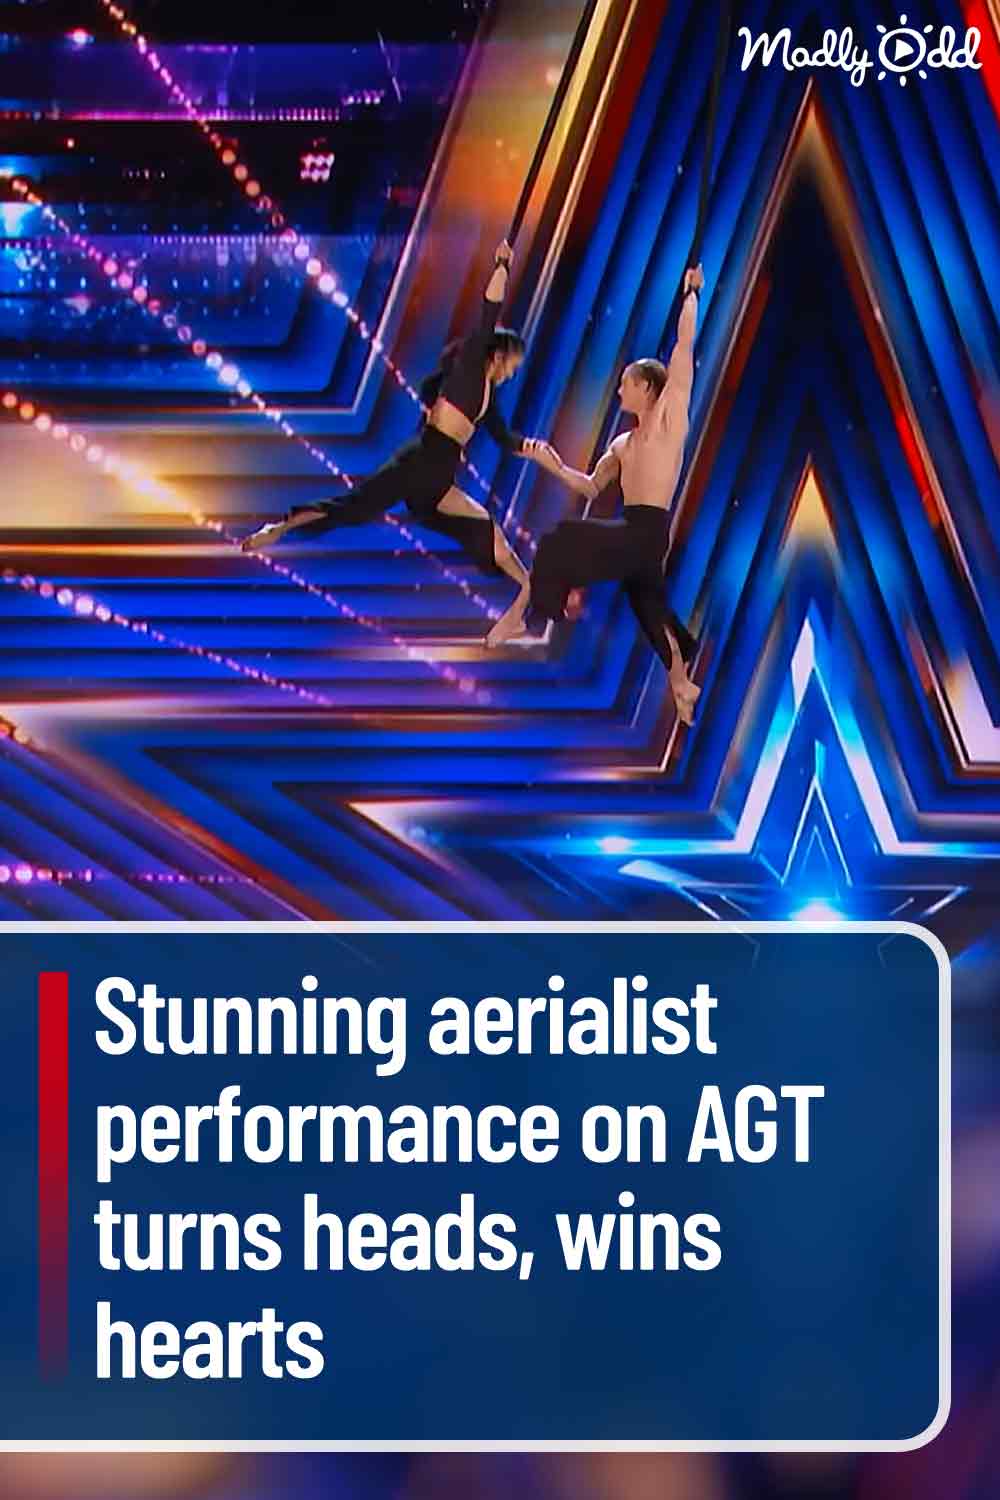 Stunning aerialist performance on AGT turns heads, wins hearts